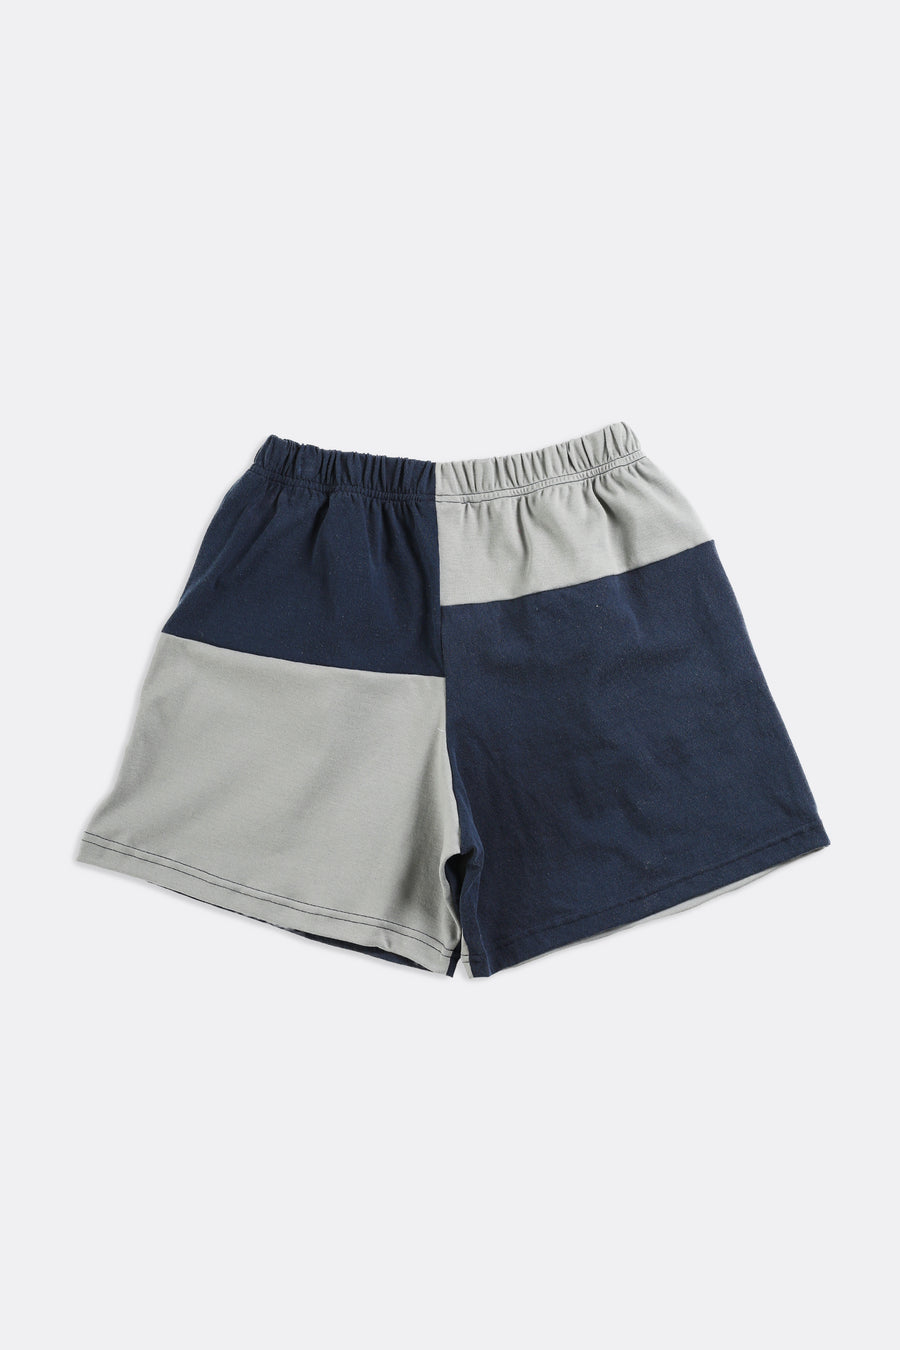 Unisex Rework Carhartt Tee Shorts - XS, S, M, L, XL